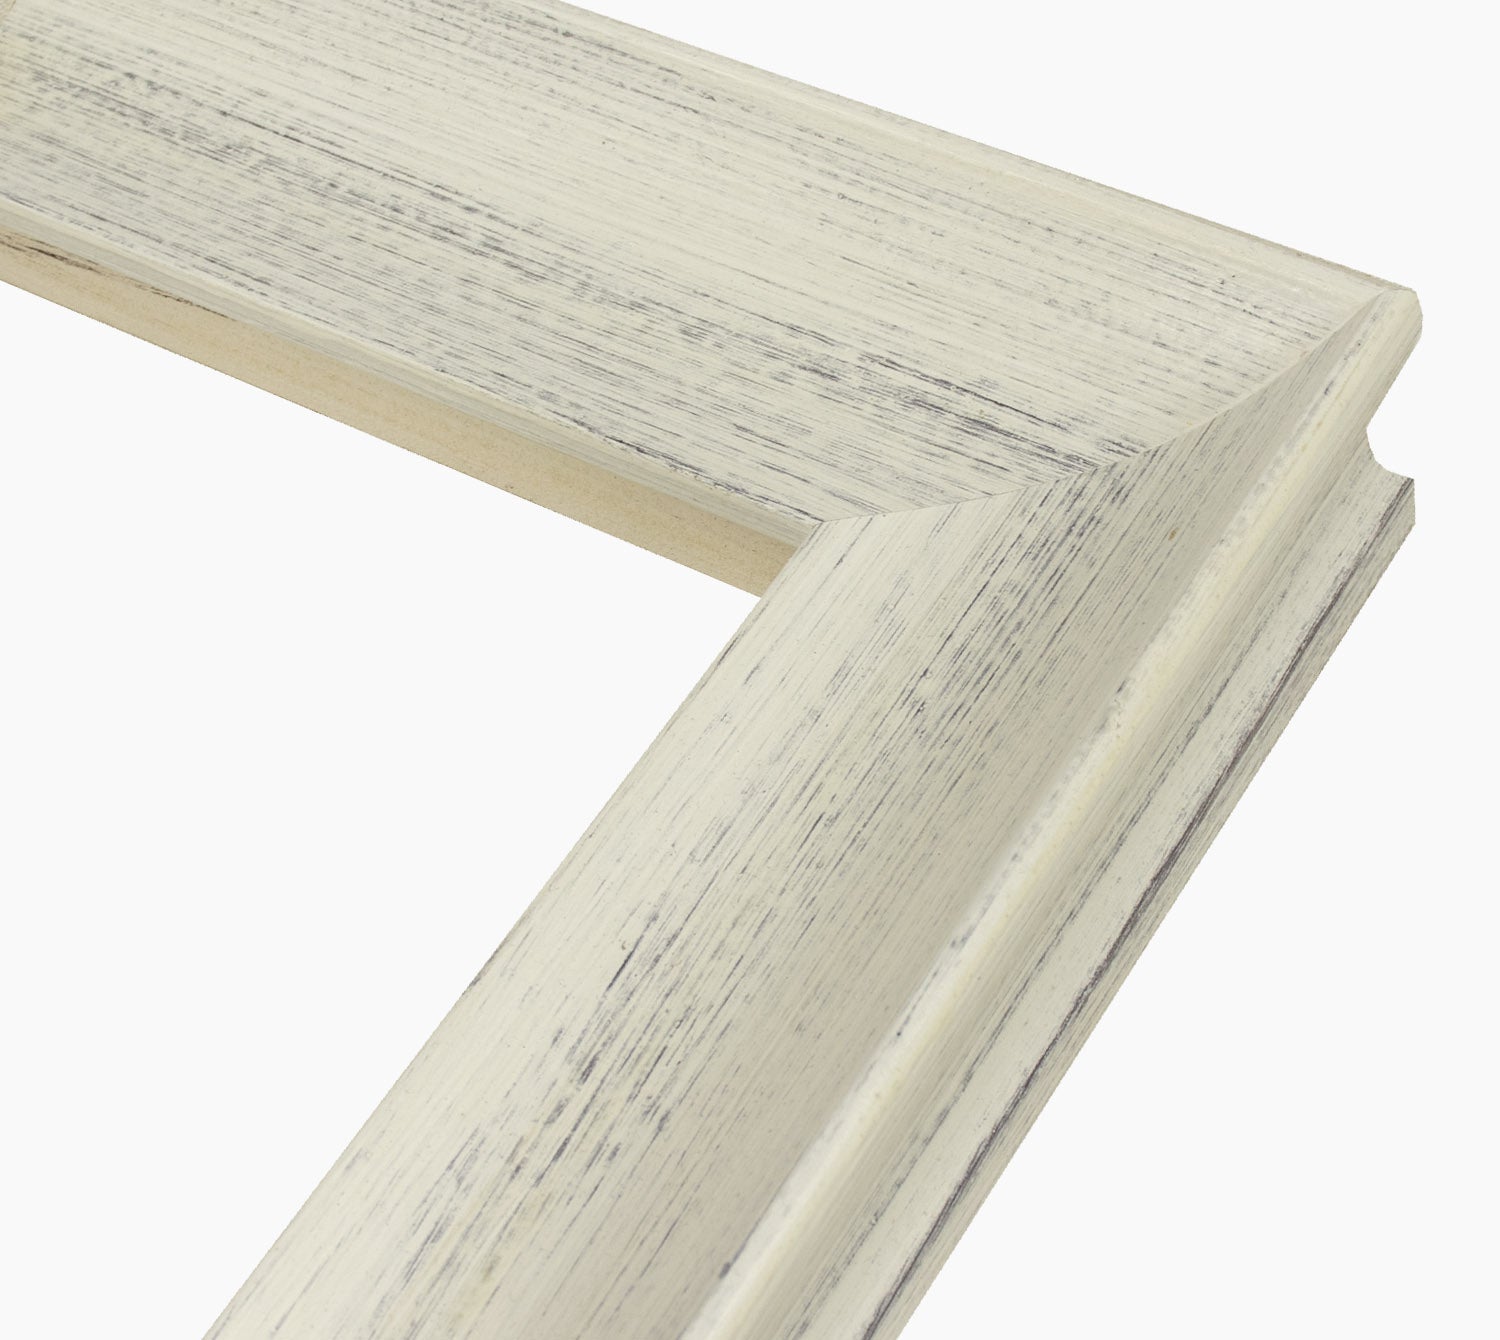 444.920 cadre en bois blanc avec fond marron mesure de profil 65x55 mm Lombarda cornici S.n.c.